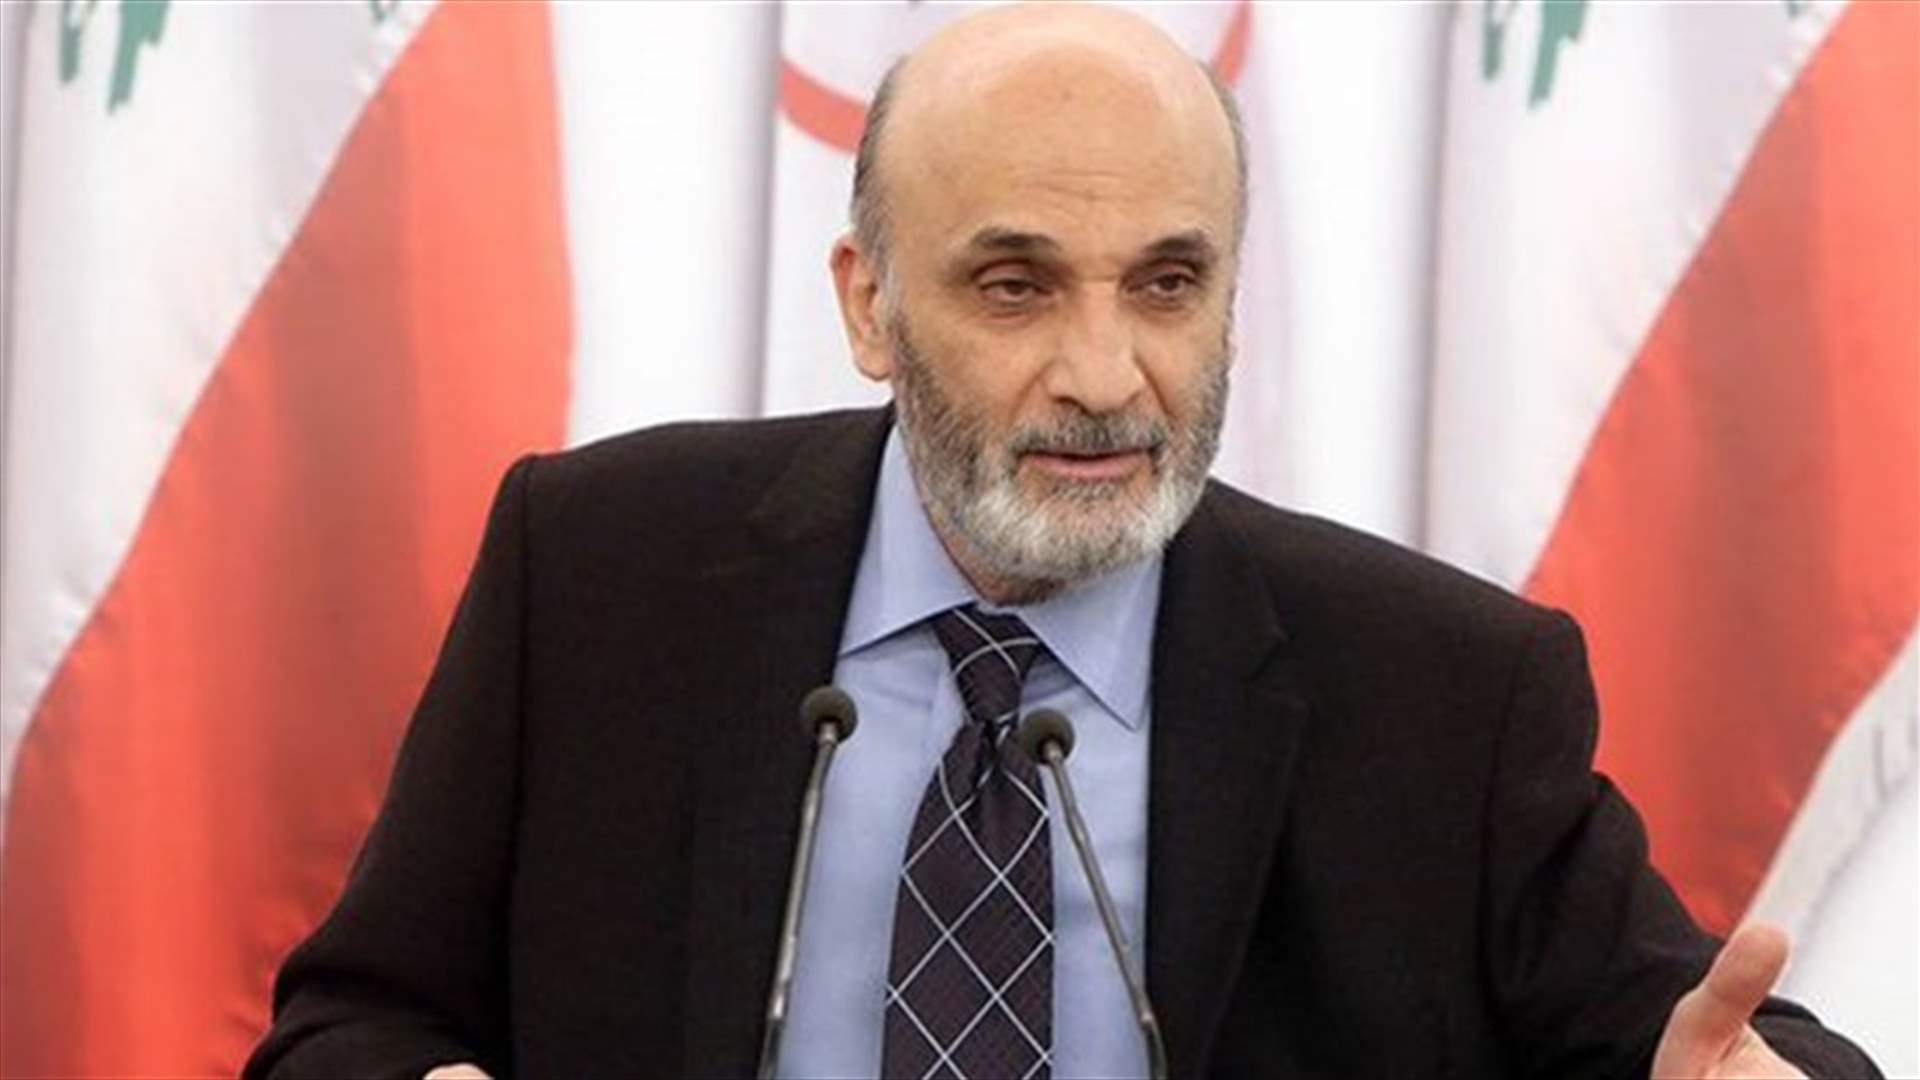 Geagea slams Bassil’s inconsistencies amid army leadership turmoil